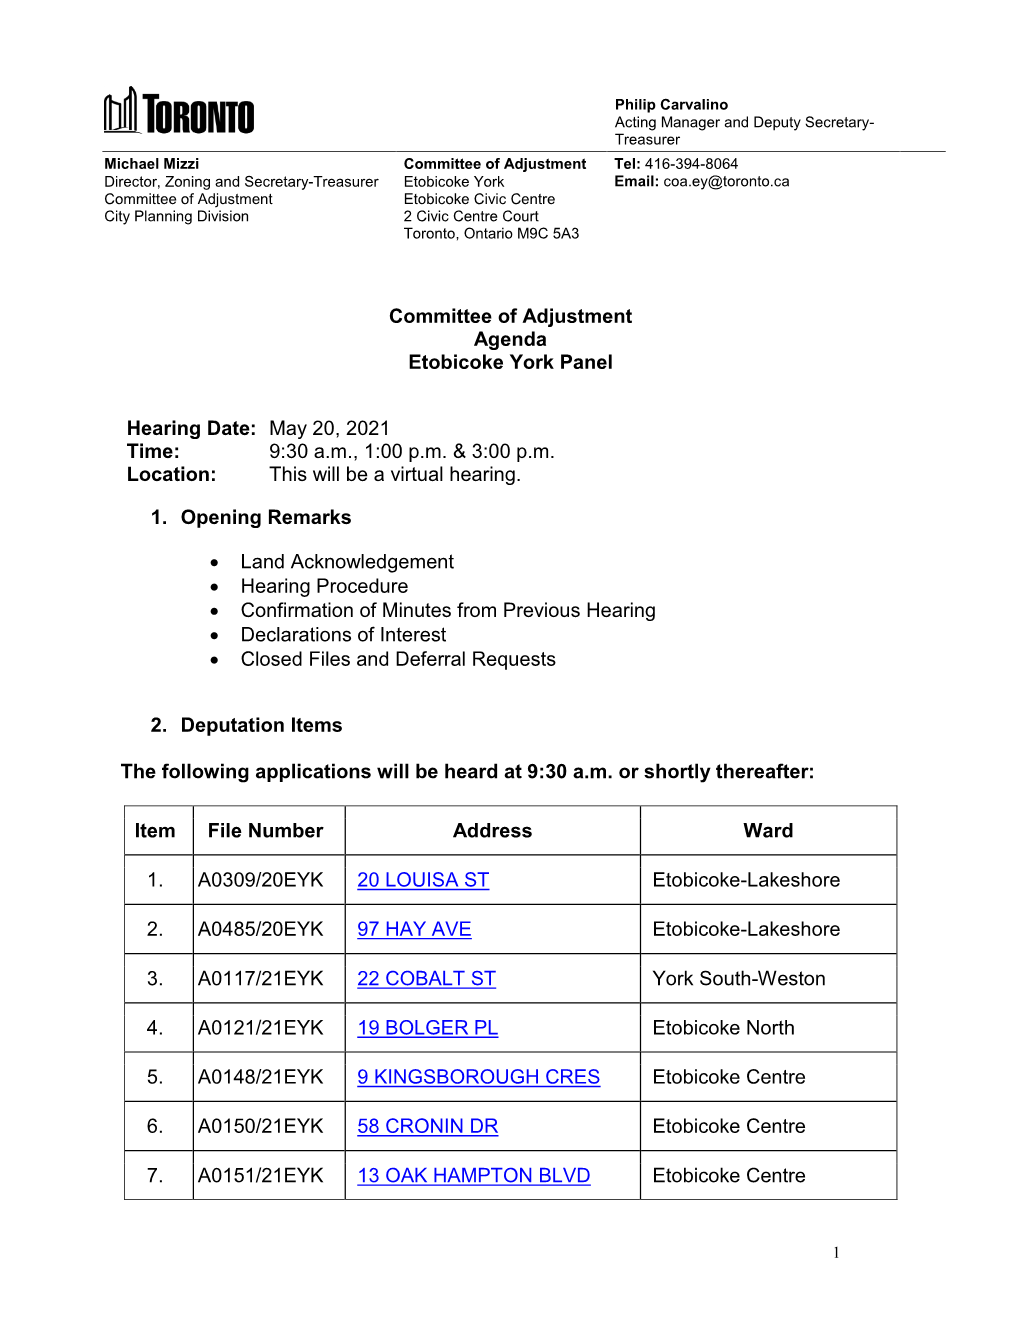 Committee of Adjustment Etobicoke York, Hearing Agenda, May 20, 2021